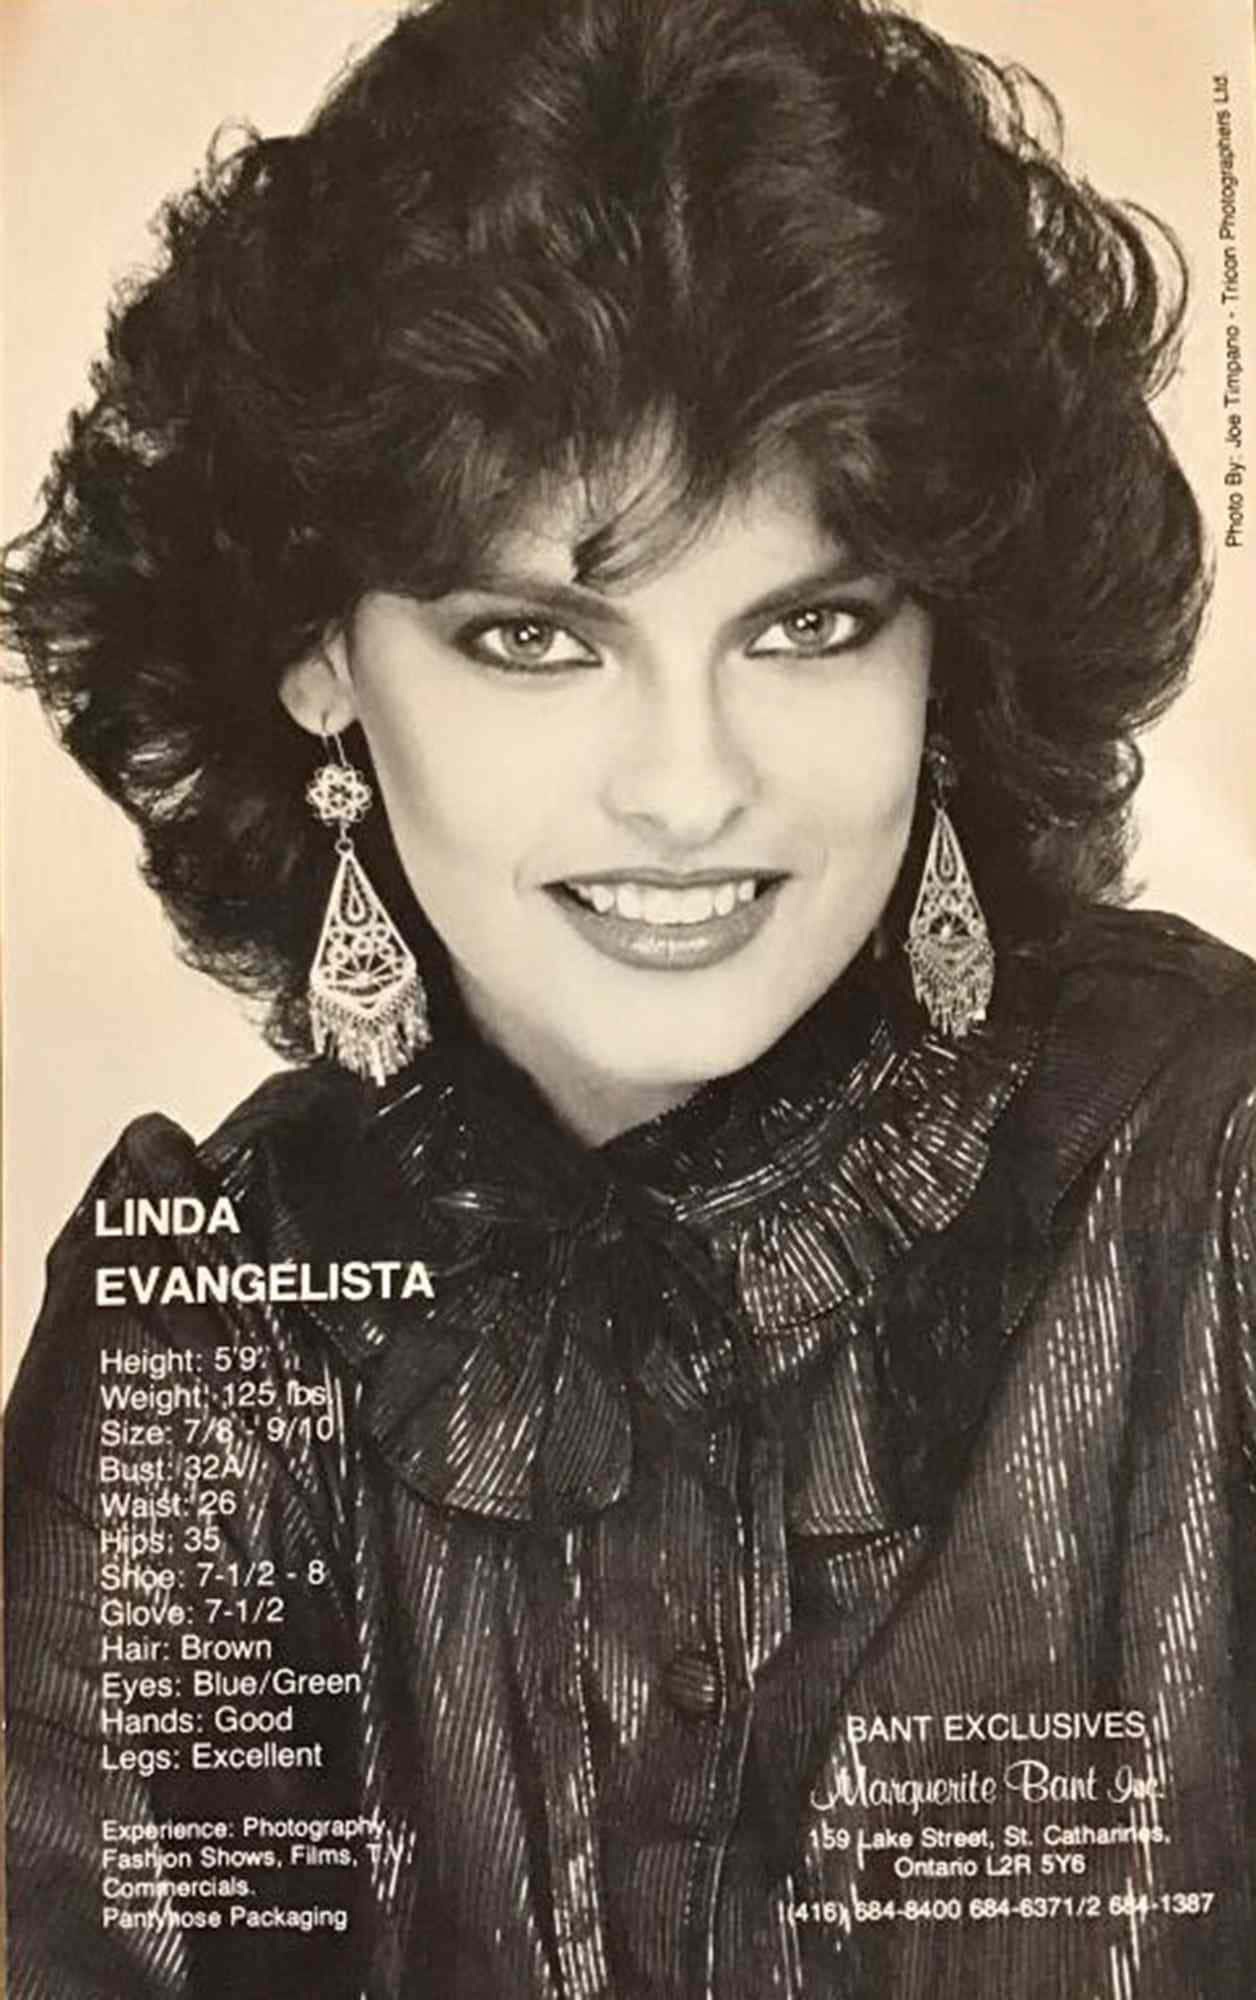 Linda Evangelista, The Timeless Beauty Of Fashion Modeling Wallpaper